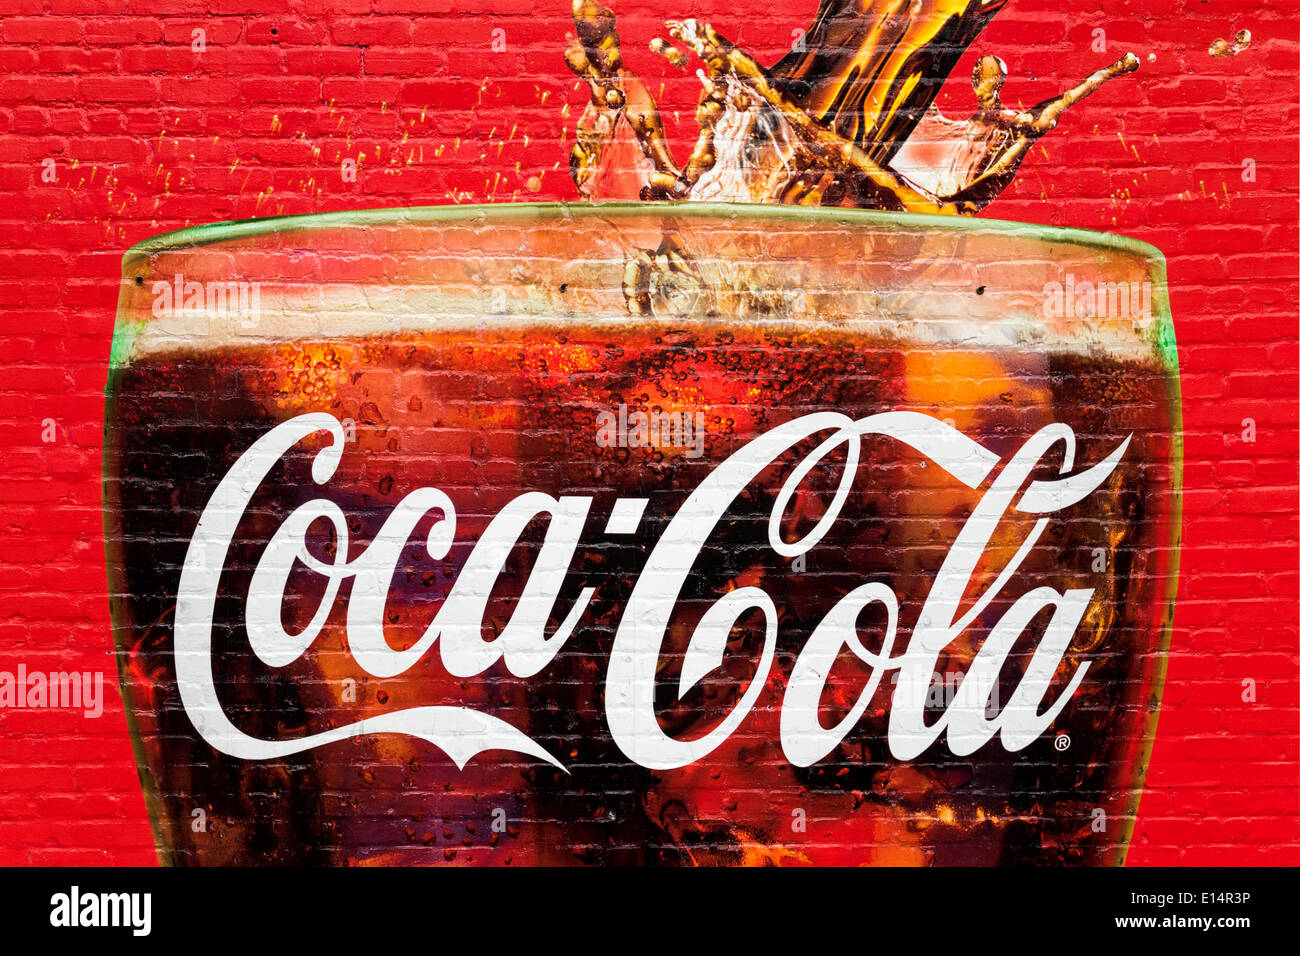 Coca Cola Museum sign, Atlanta Stock Photo